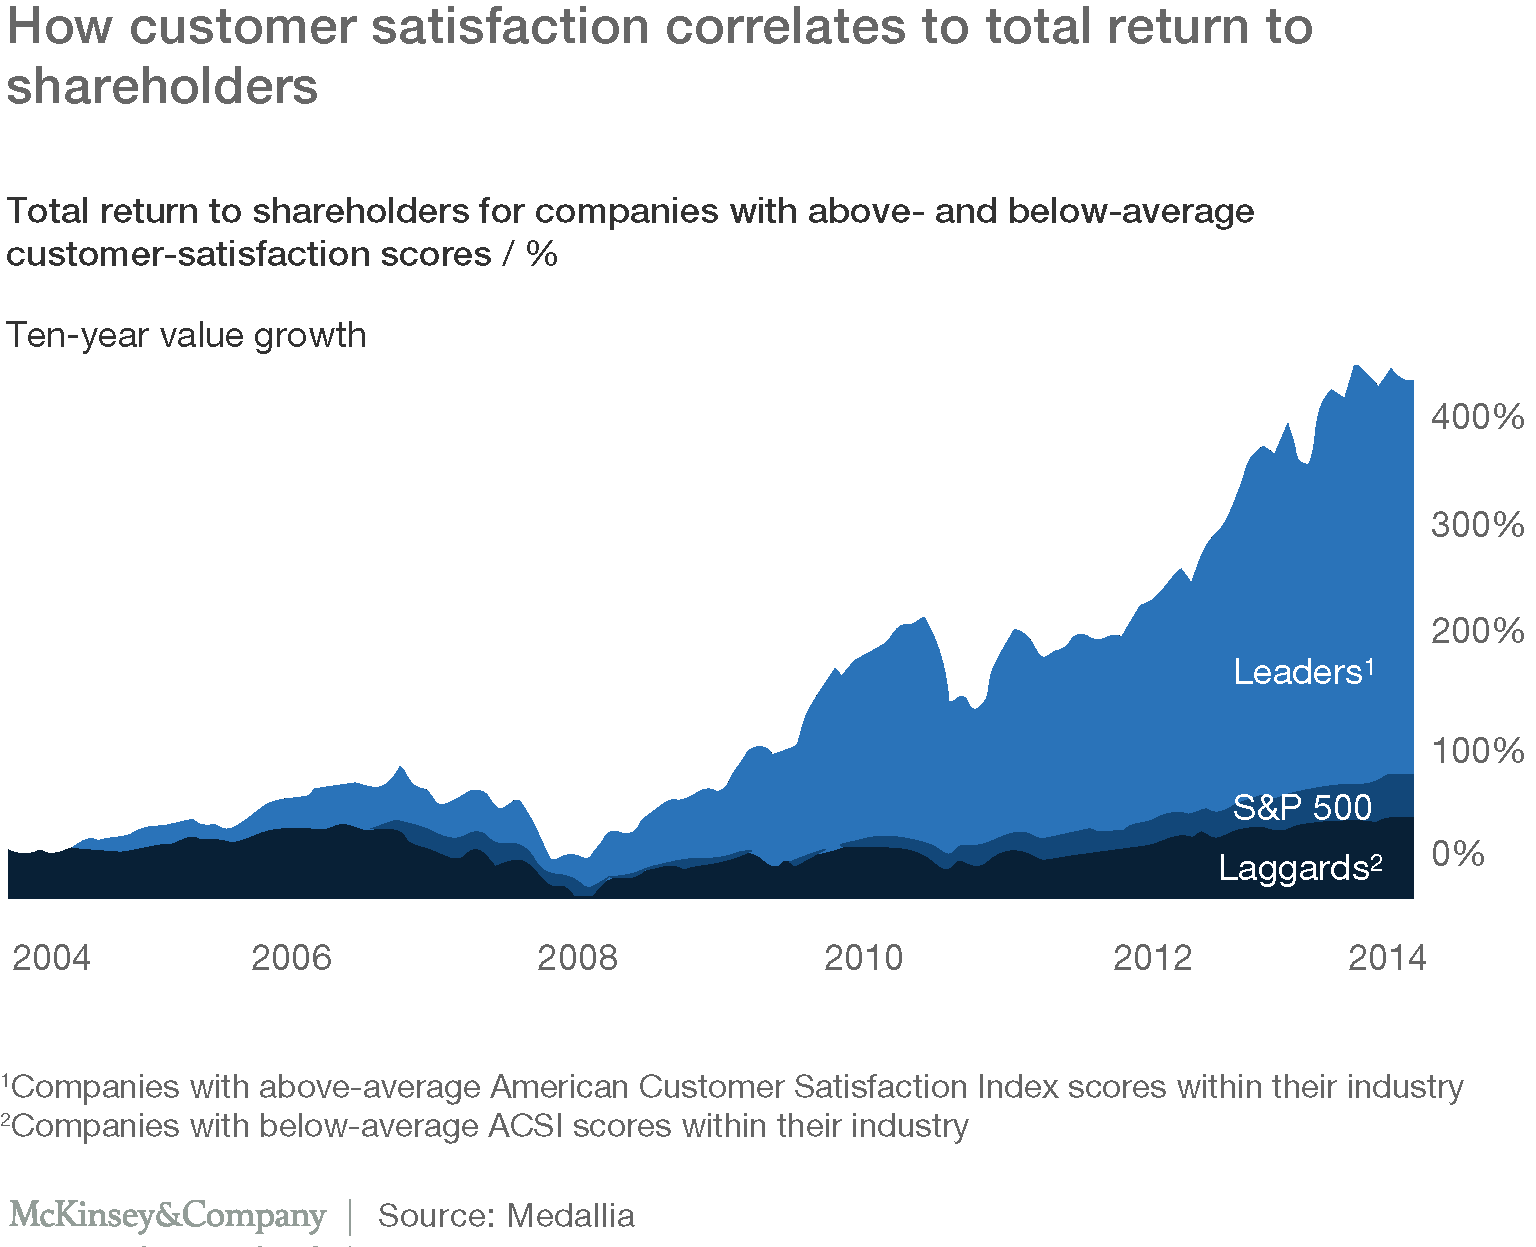 How customer satisfaction correlates to total return to shareholders